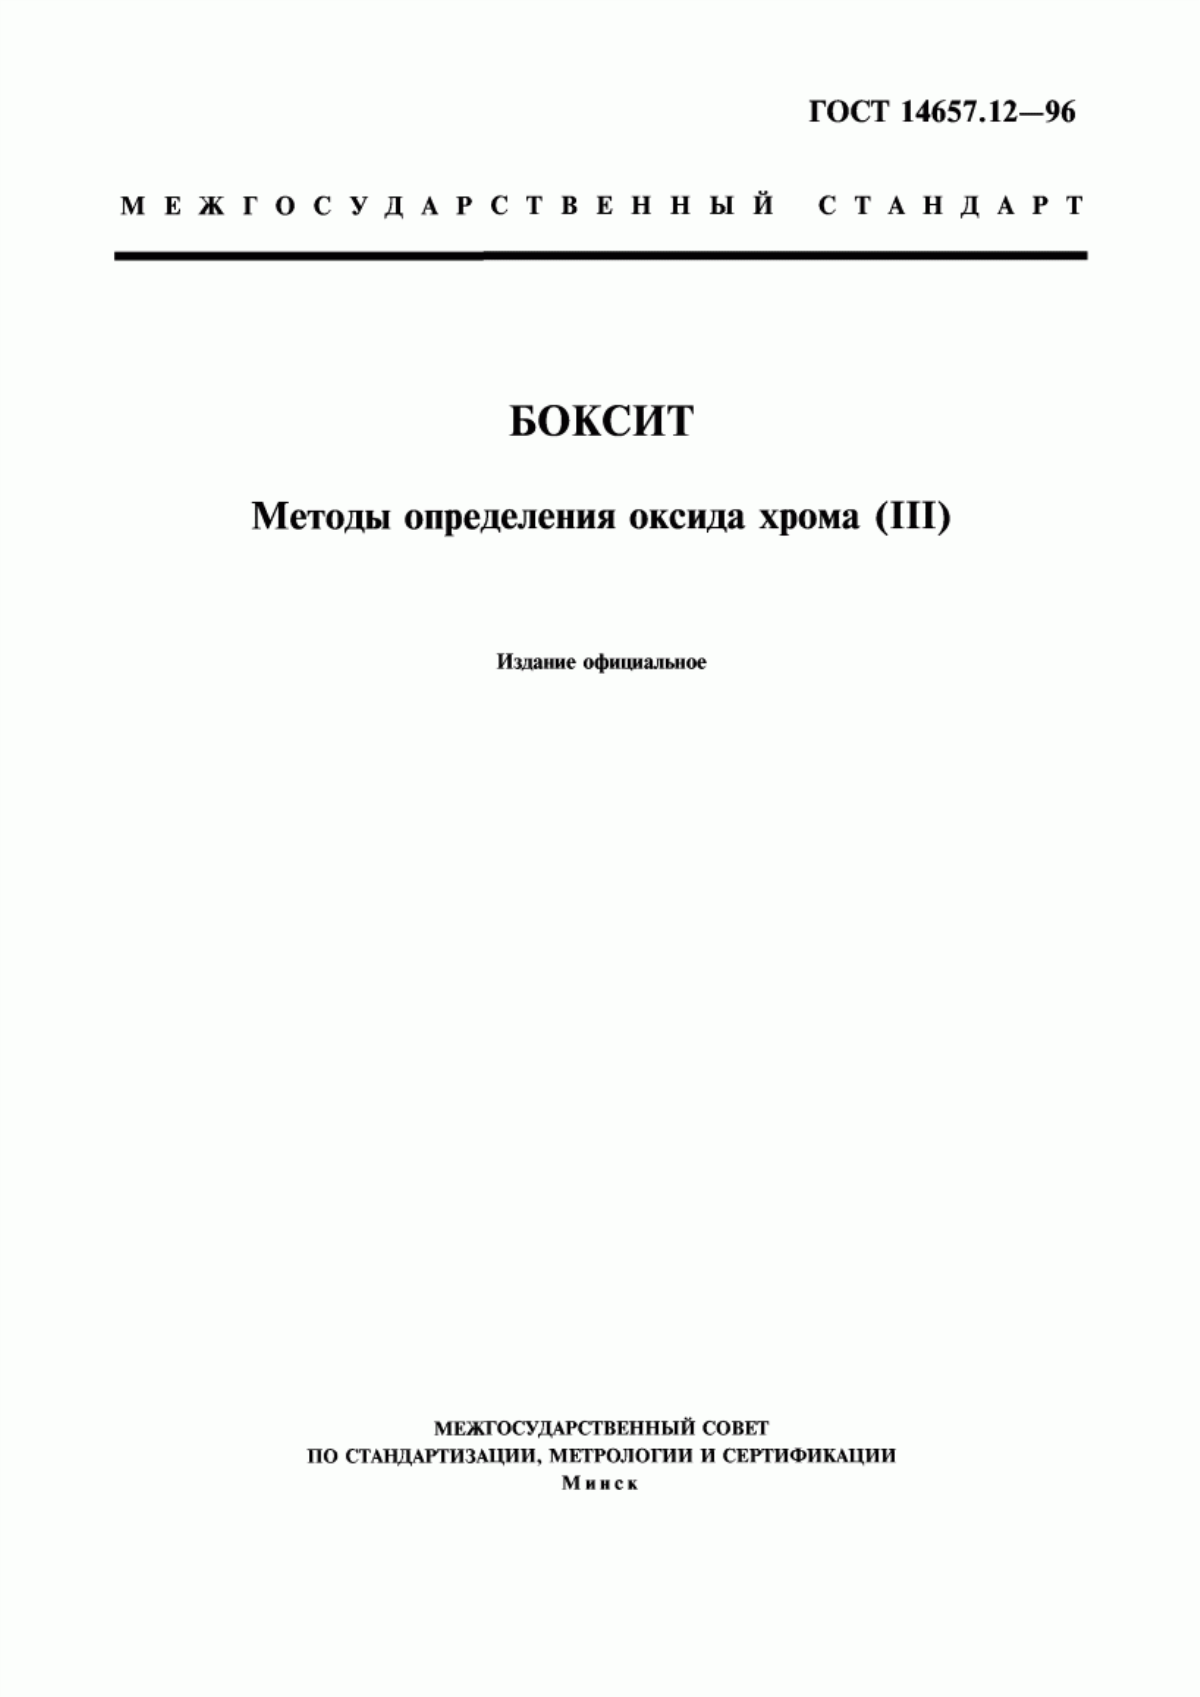 ГОСТ 14657.12-96 Боксит. Методы определения оксида хрома (III)